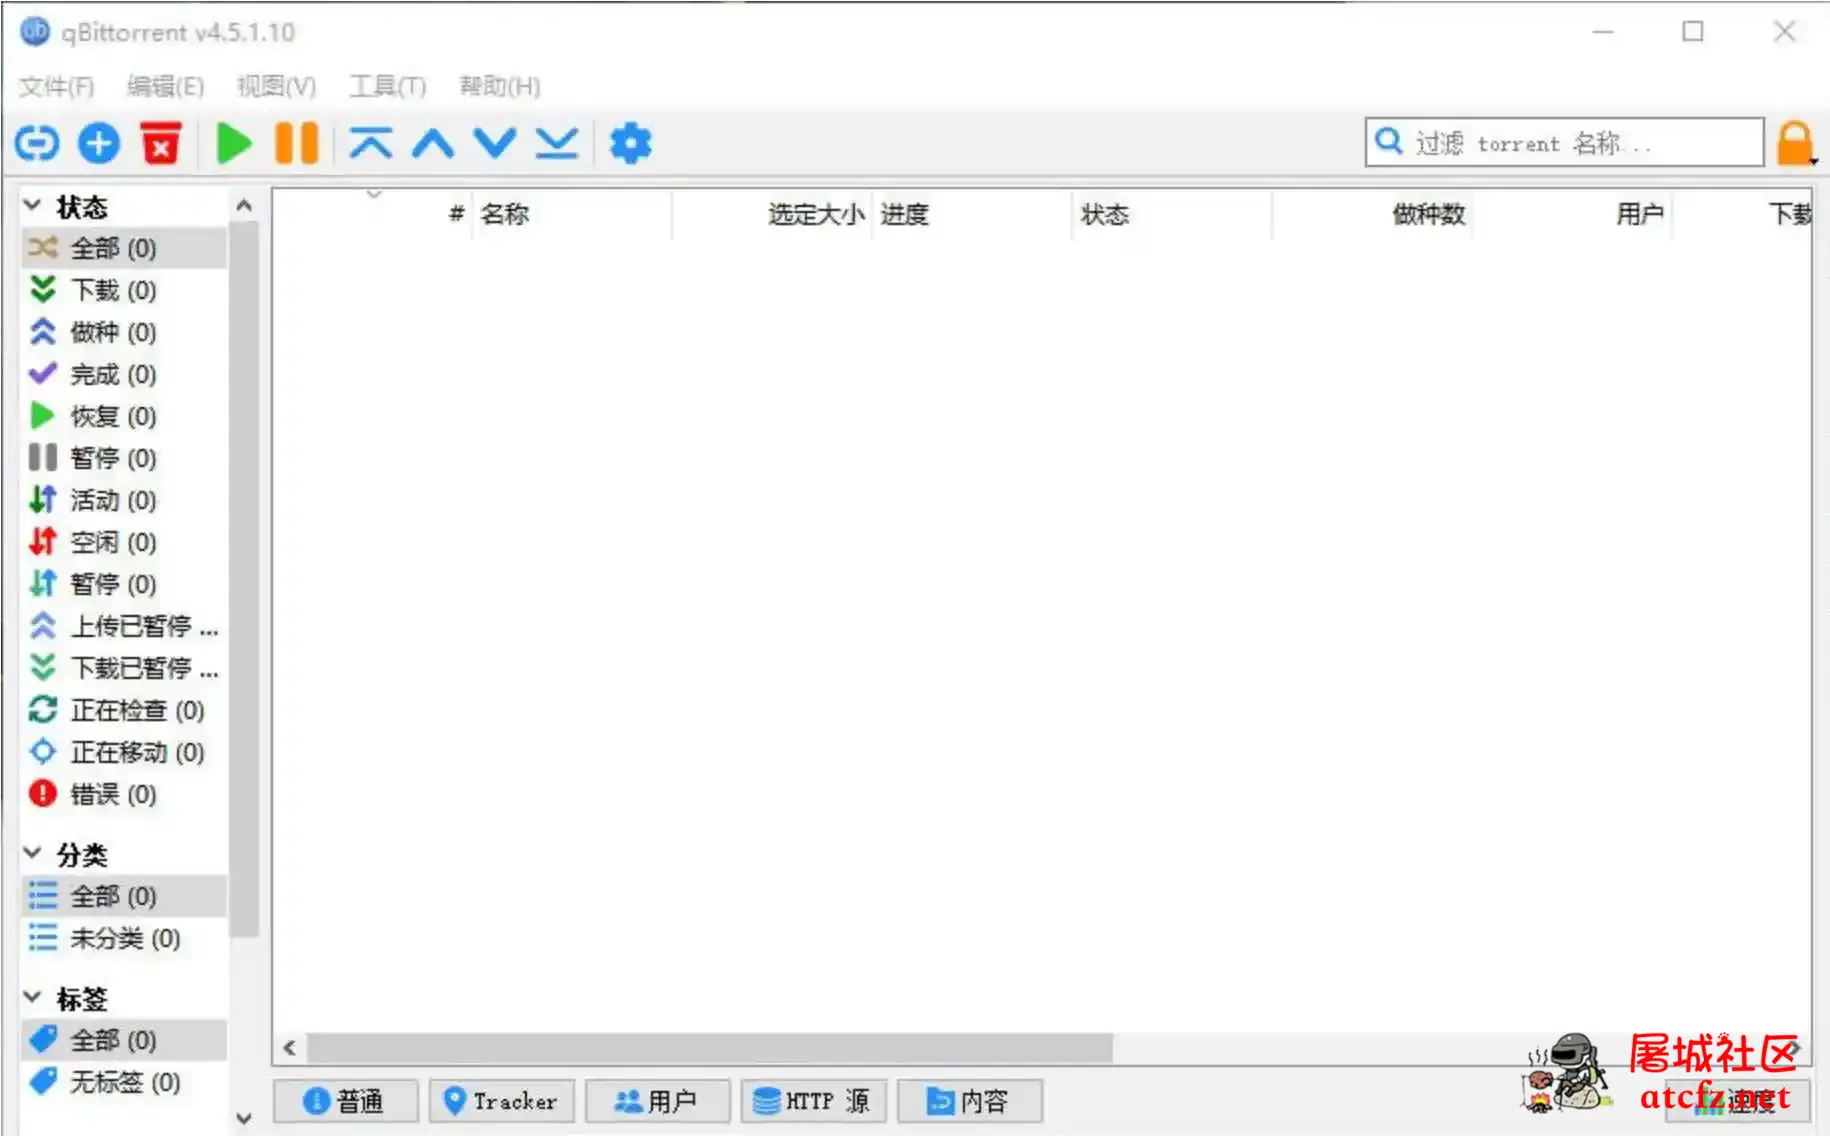 qBittorrent v4.5.3.10增强便携版BT种子下载工具 屠城辅助网www.tcfz1.com8163